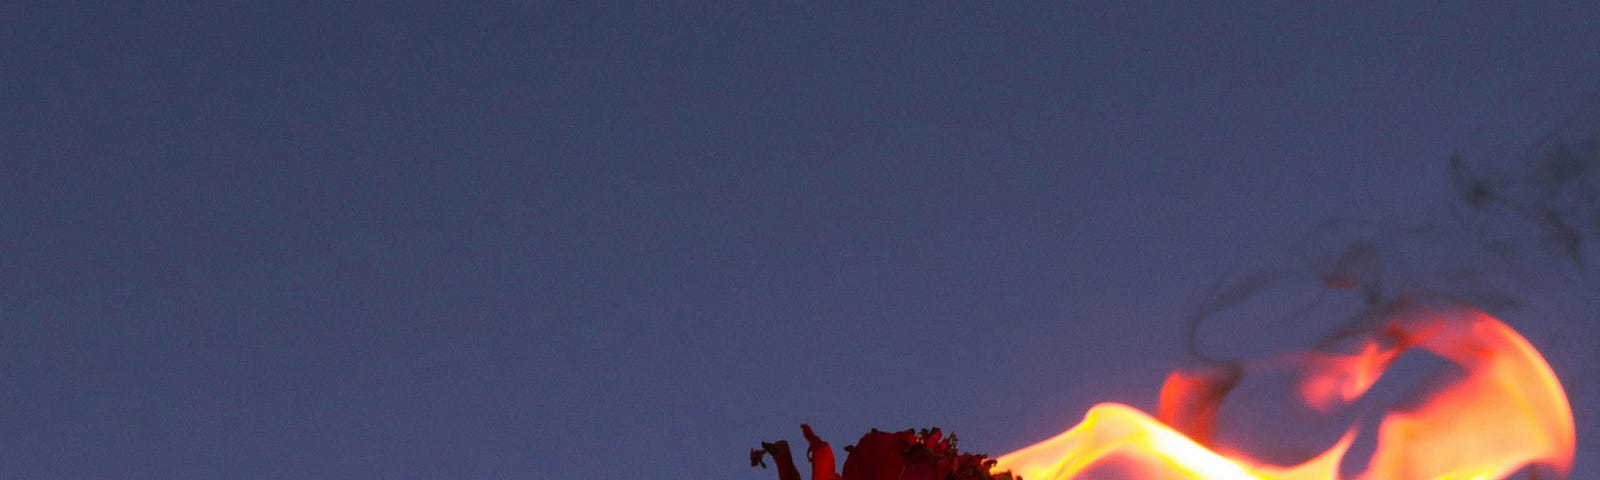 holding a burning rose, evening sky